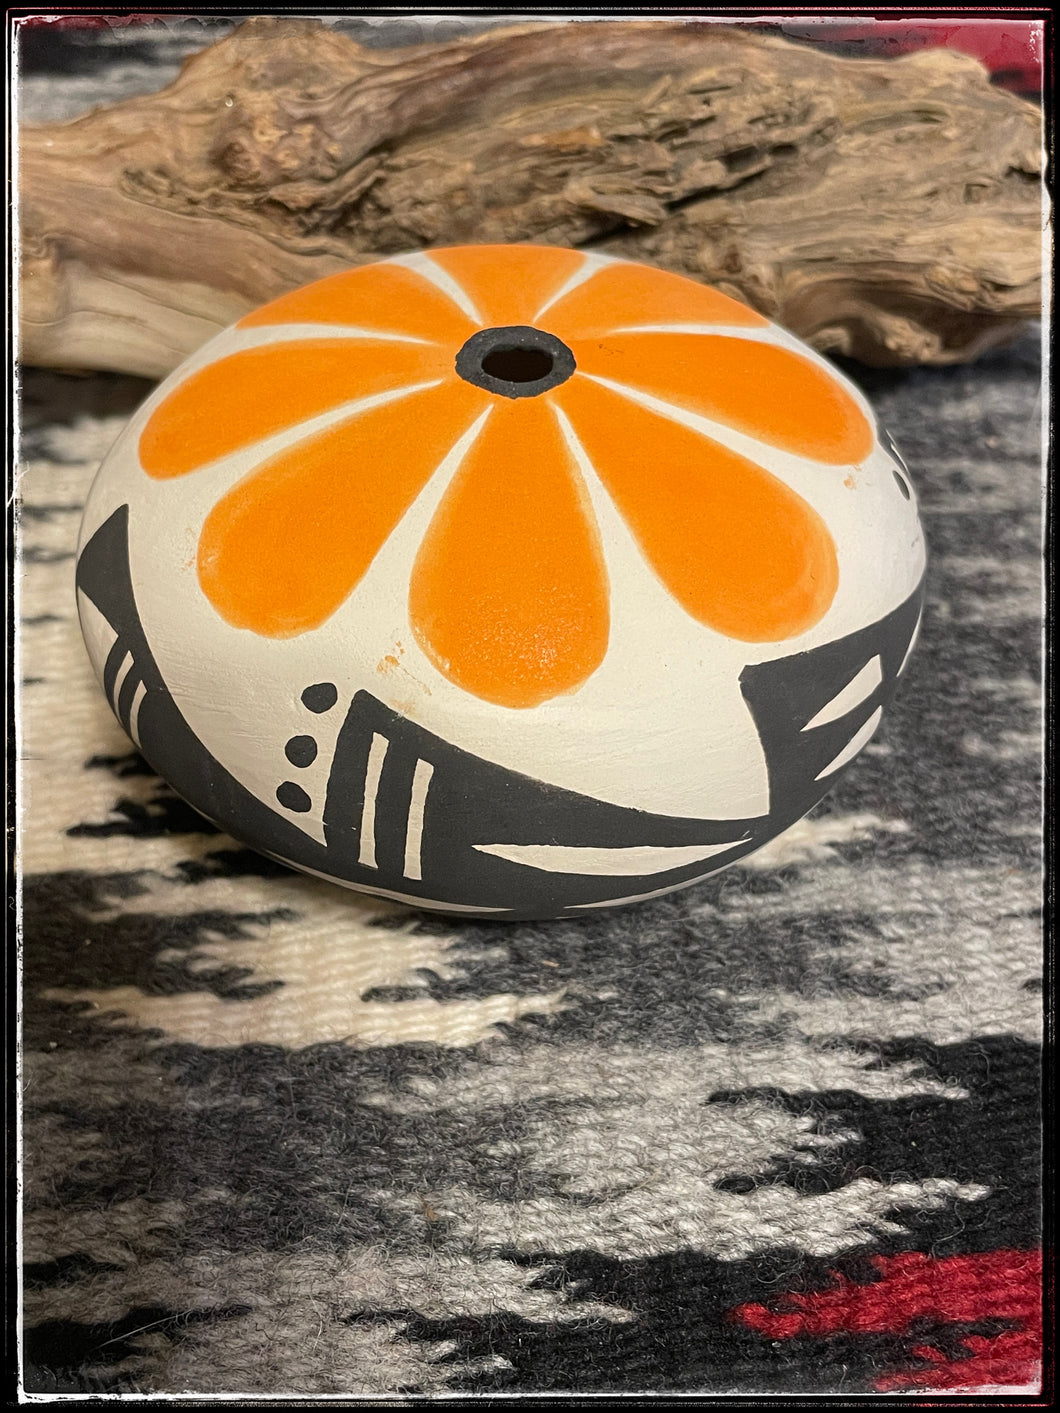 Handmade Acoma seed pot from artist 